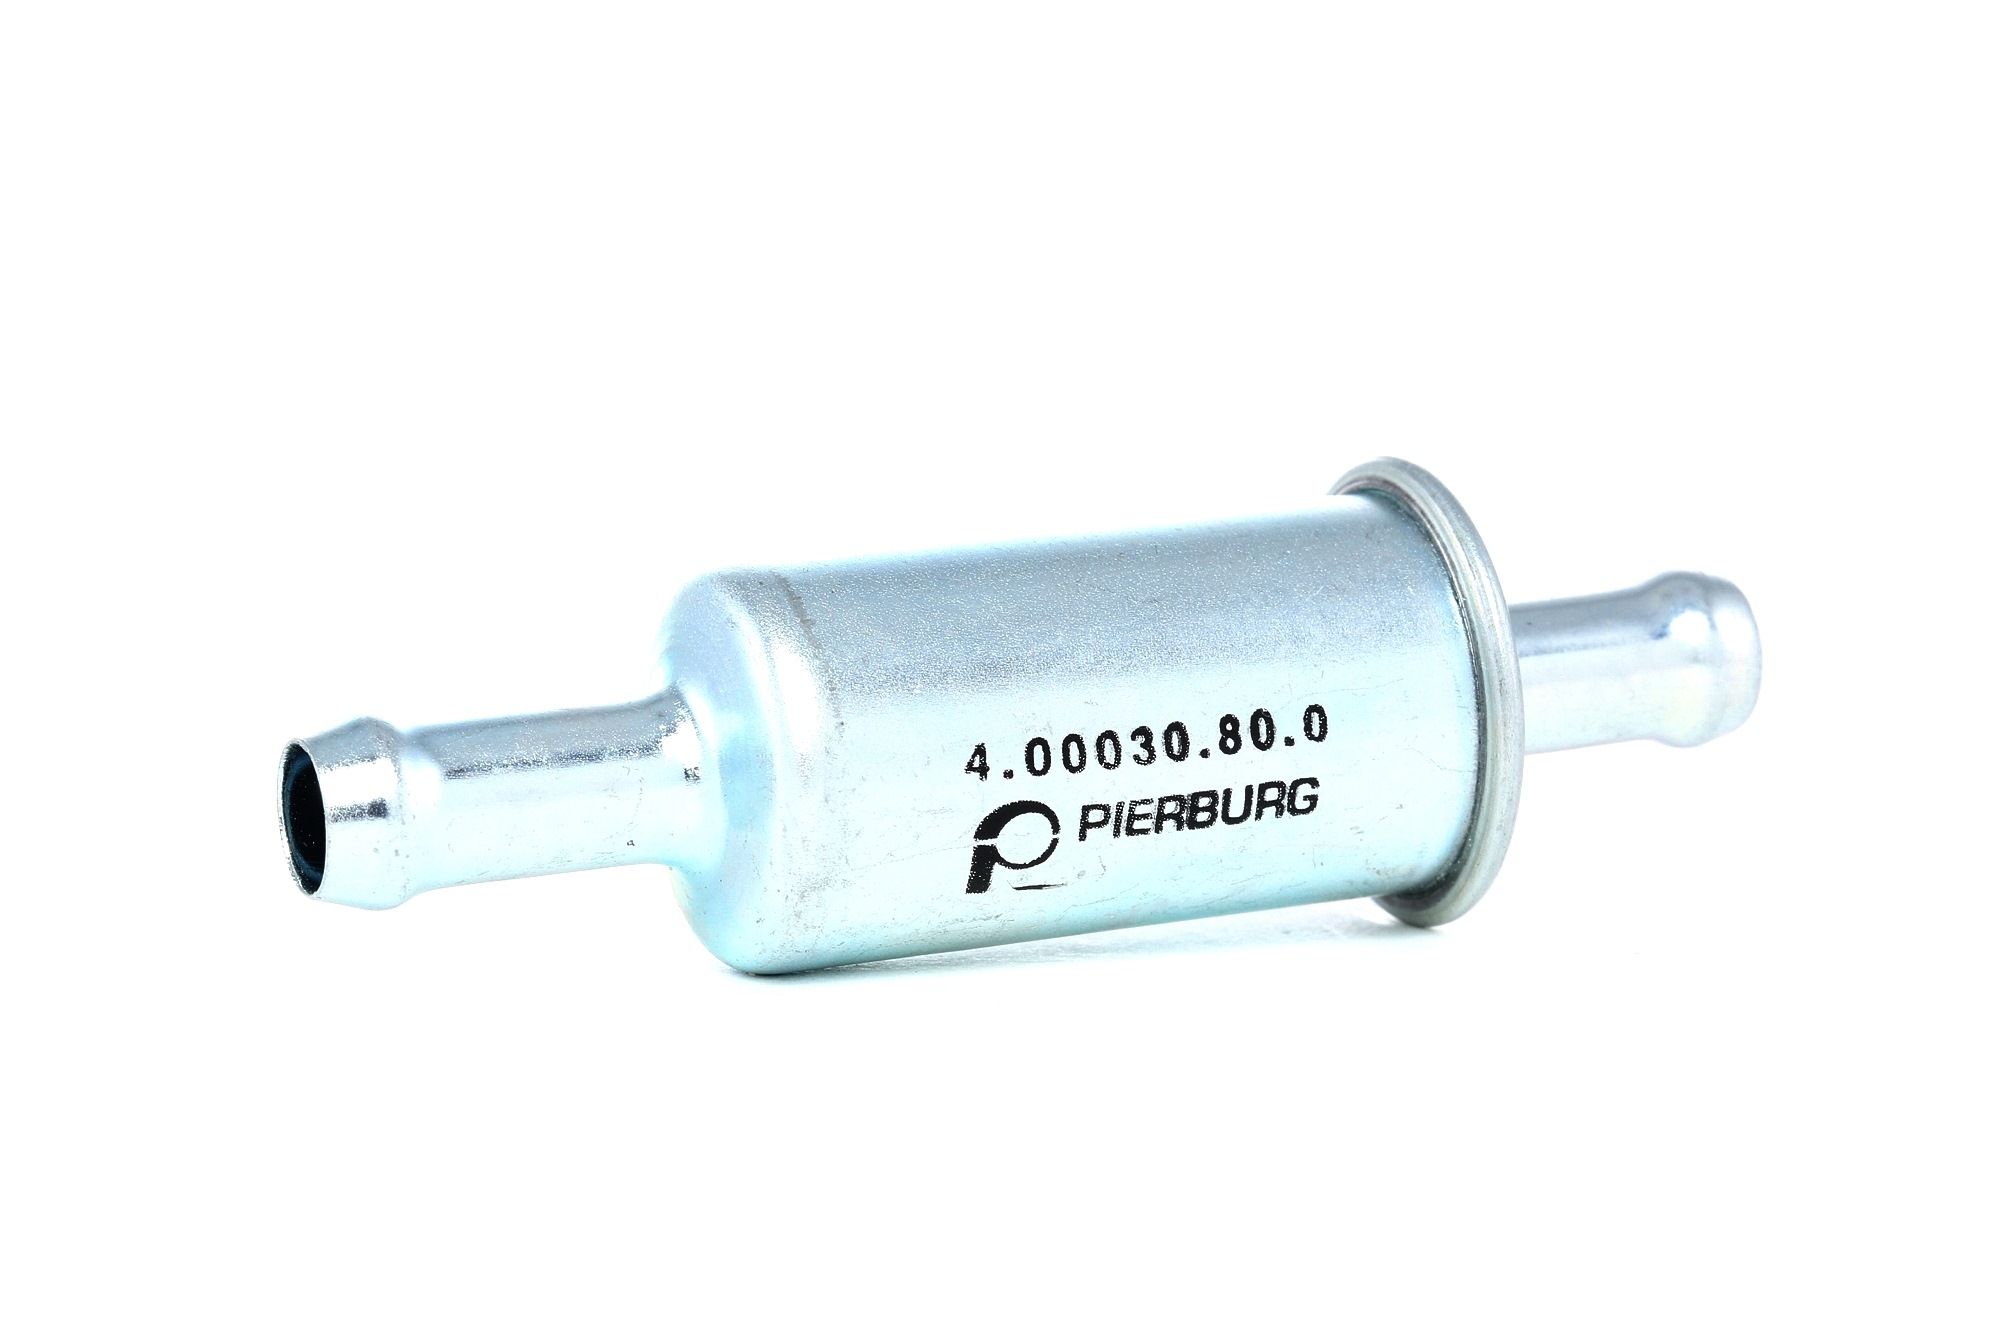 PIERBURG 4.00030.80.0 Palivový filtr Filtr zabudovaný do potrubí Daihatsu v originální kvalitě